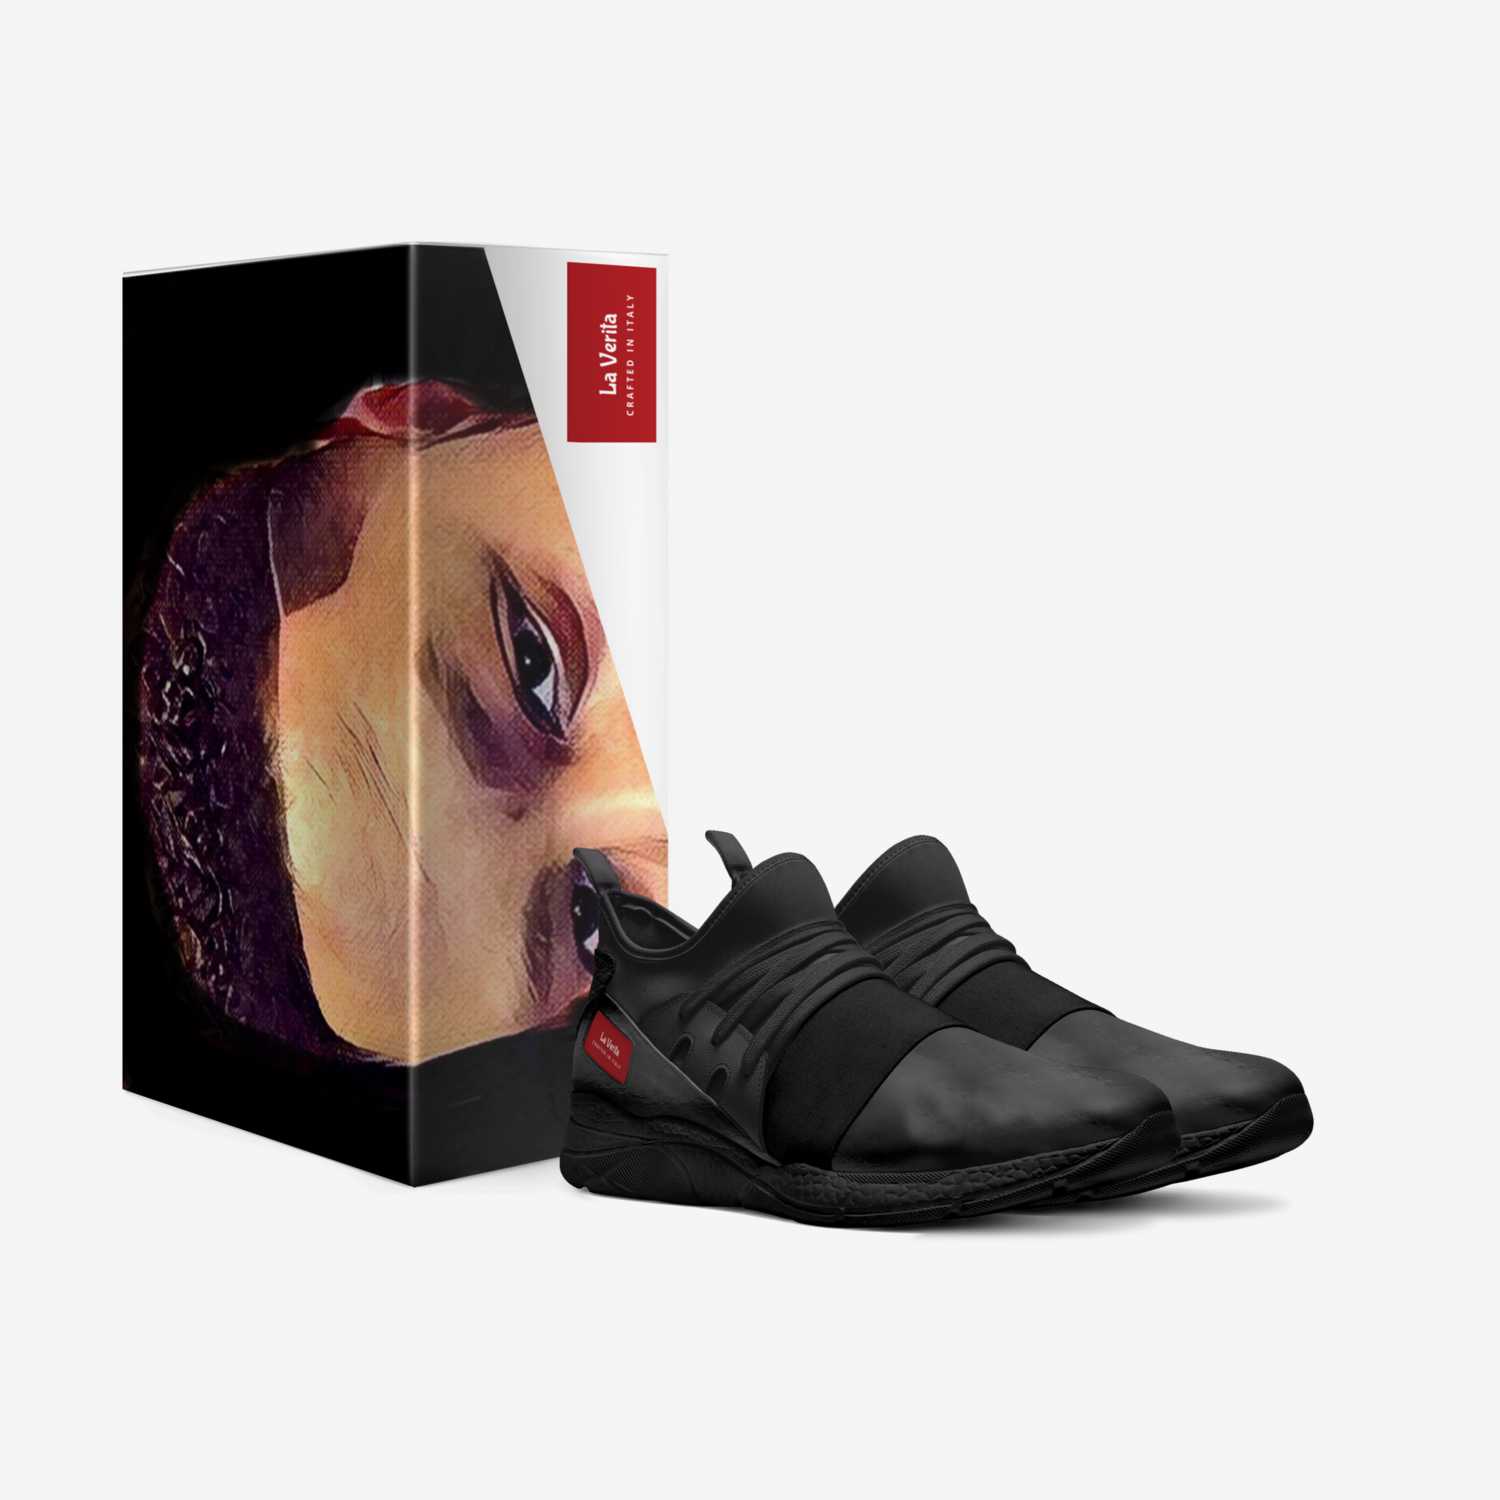 La Verita custom made in Italy shoes by Ric Devon | Box view